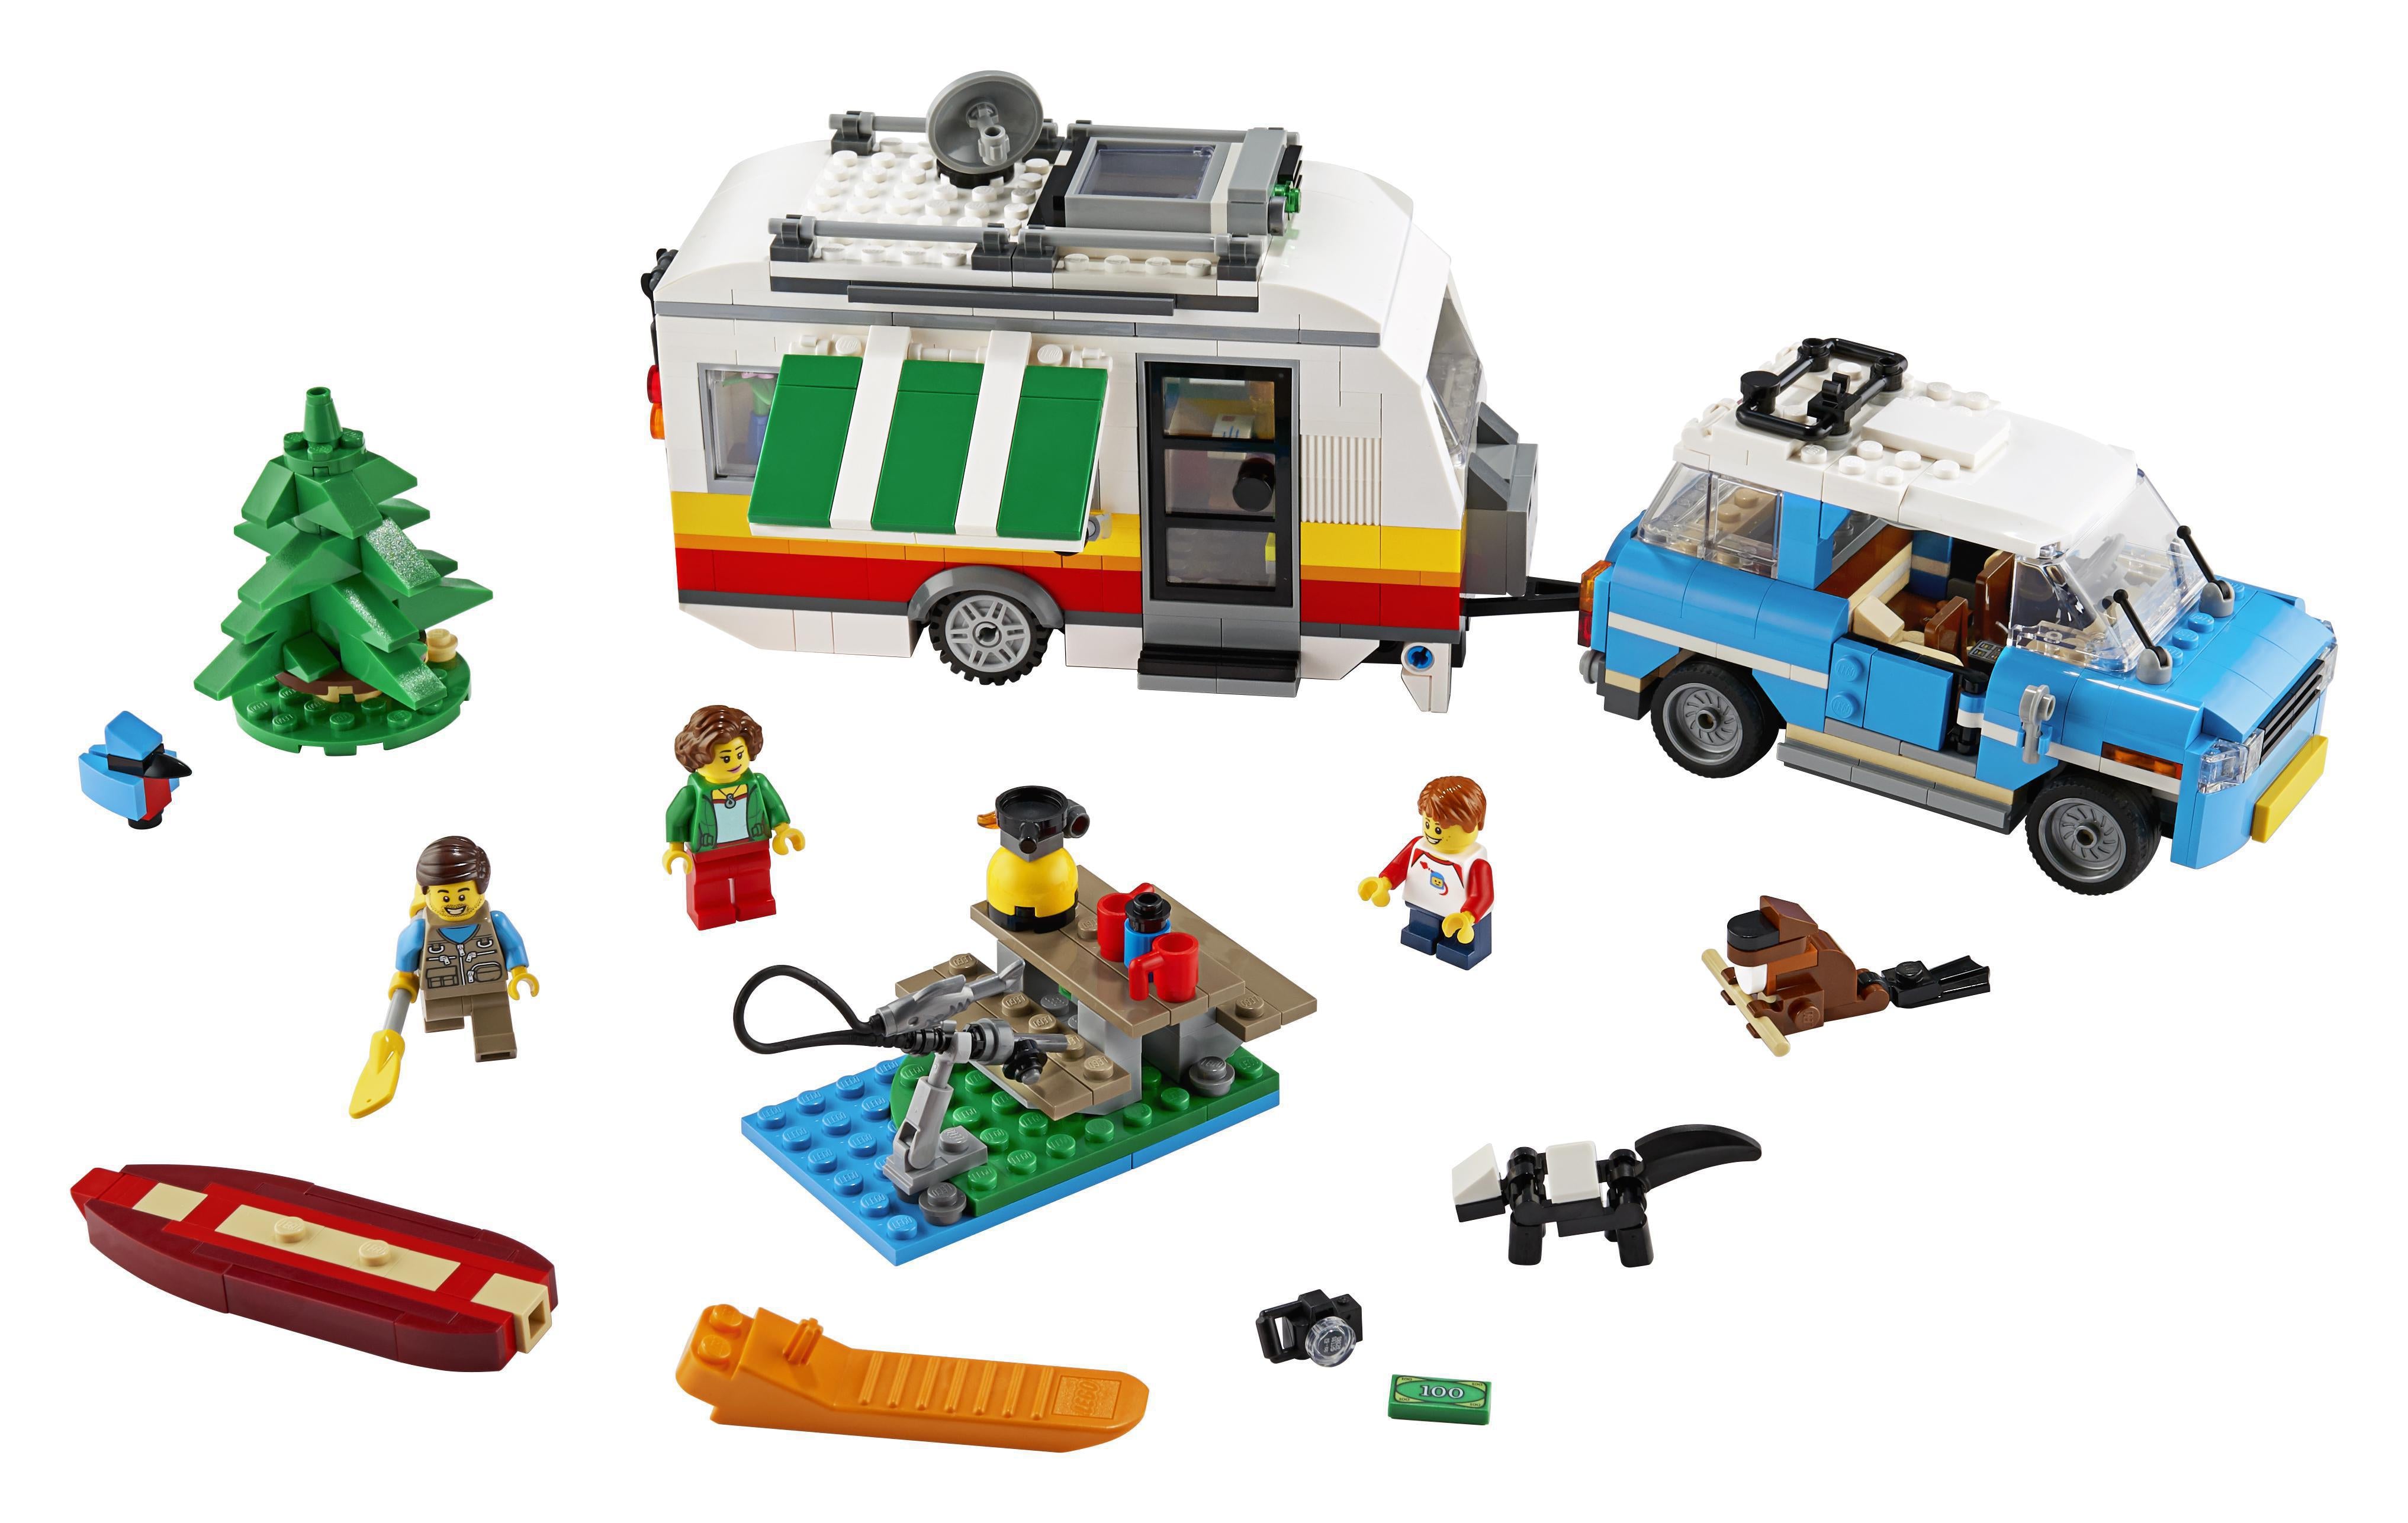 LEGO Creator Caravan Family Holiday 31108